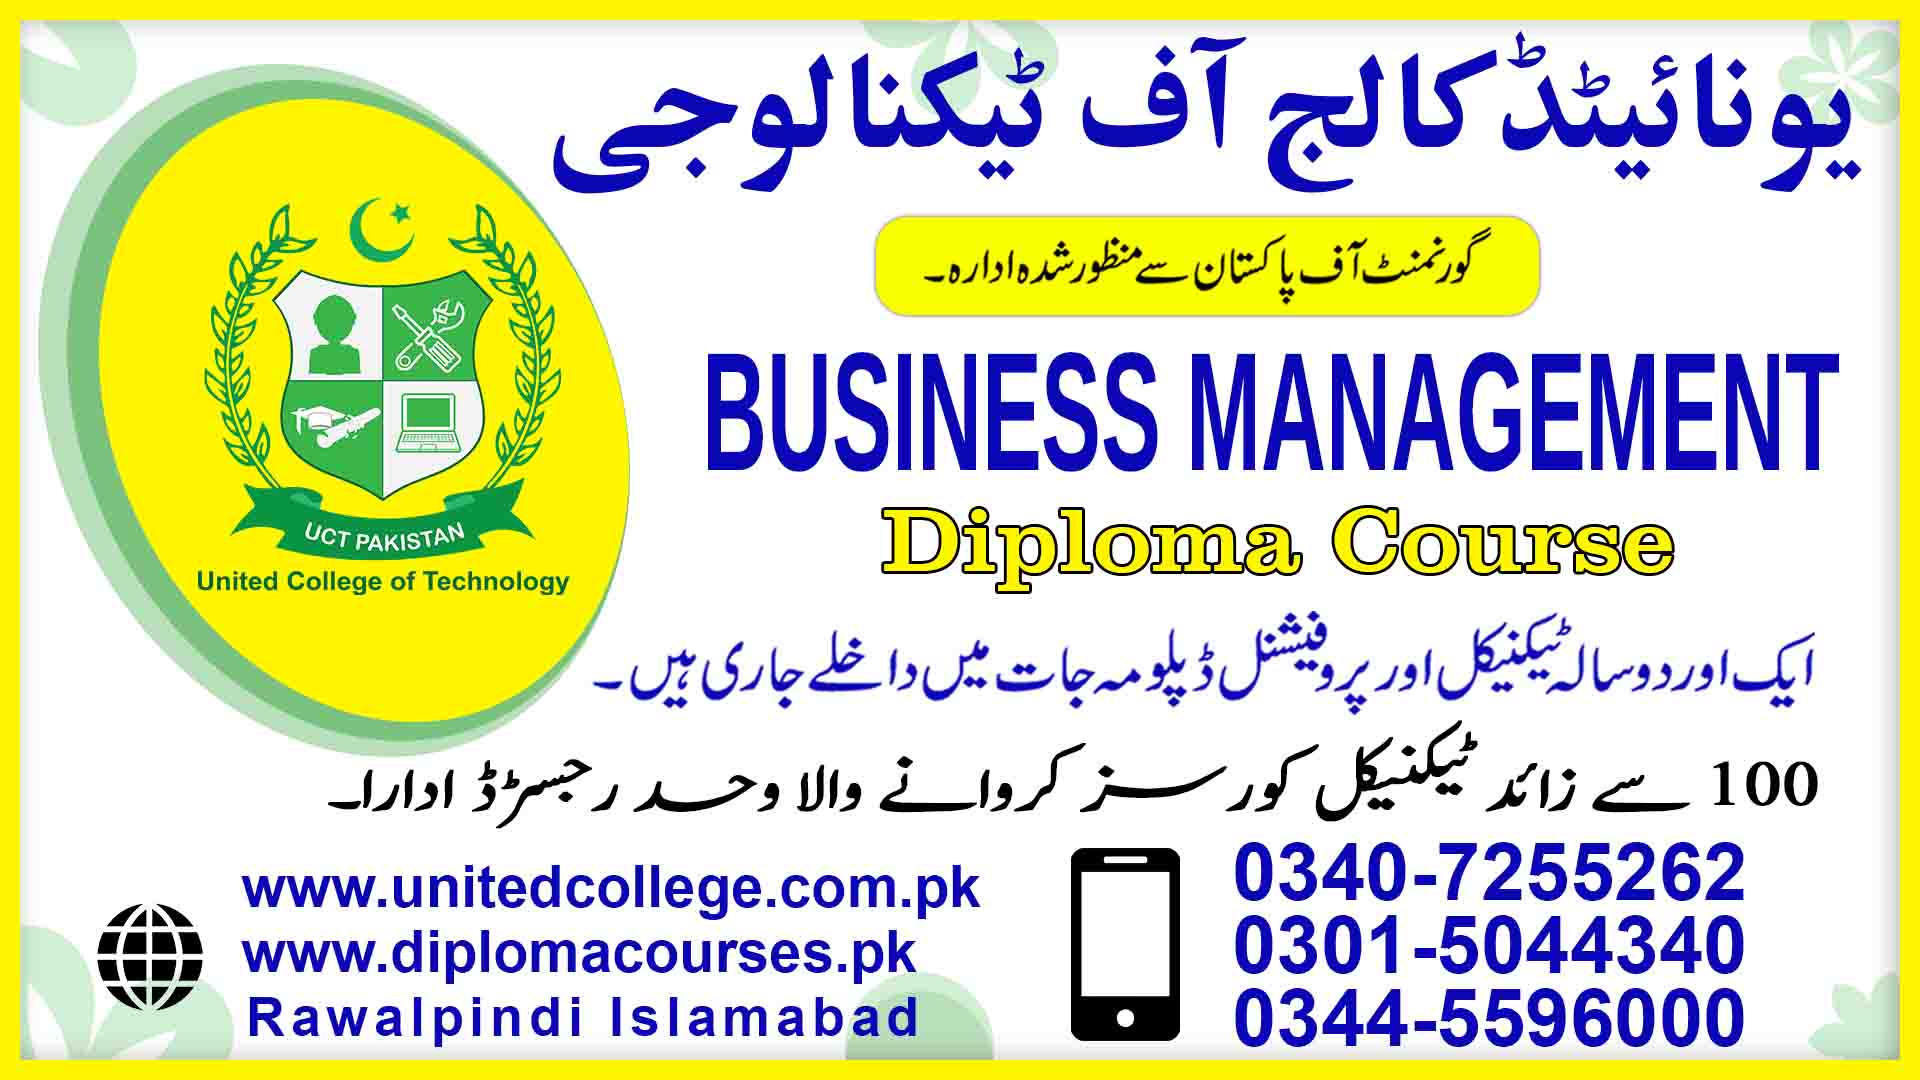 BUSINESS MANAGEMENT COURSE IN RAWALPINDI ISLAMABAD PAKISTAN